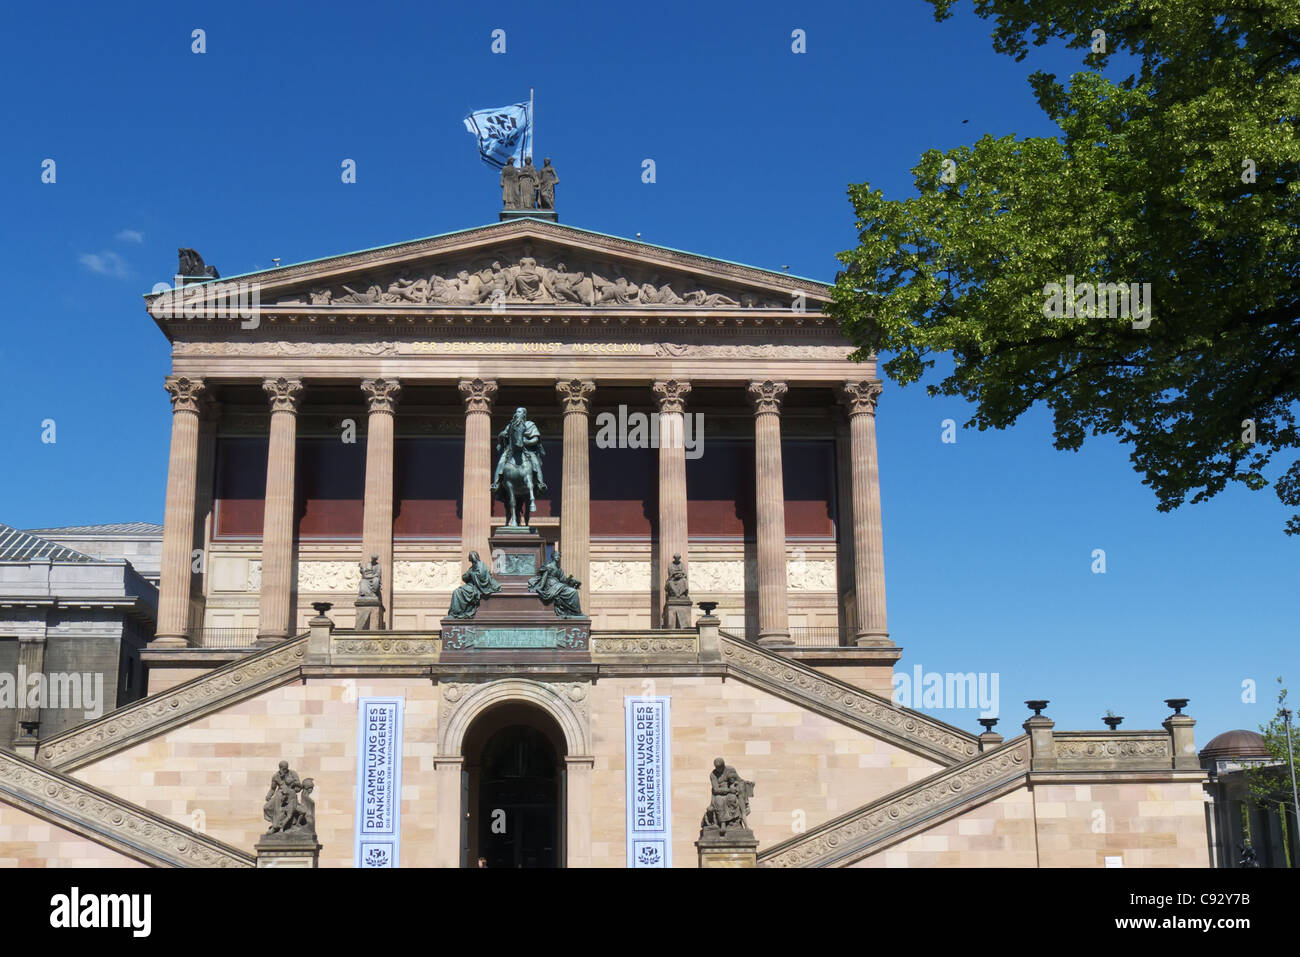 The Alte Nationalgalerie museum in Berlin, Germany Stock Photo